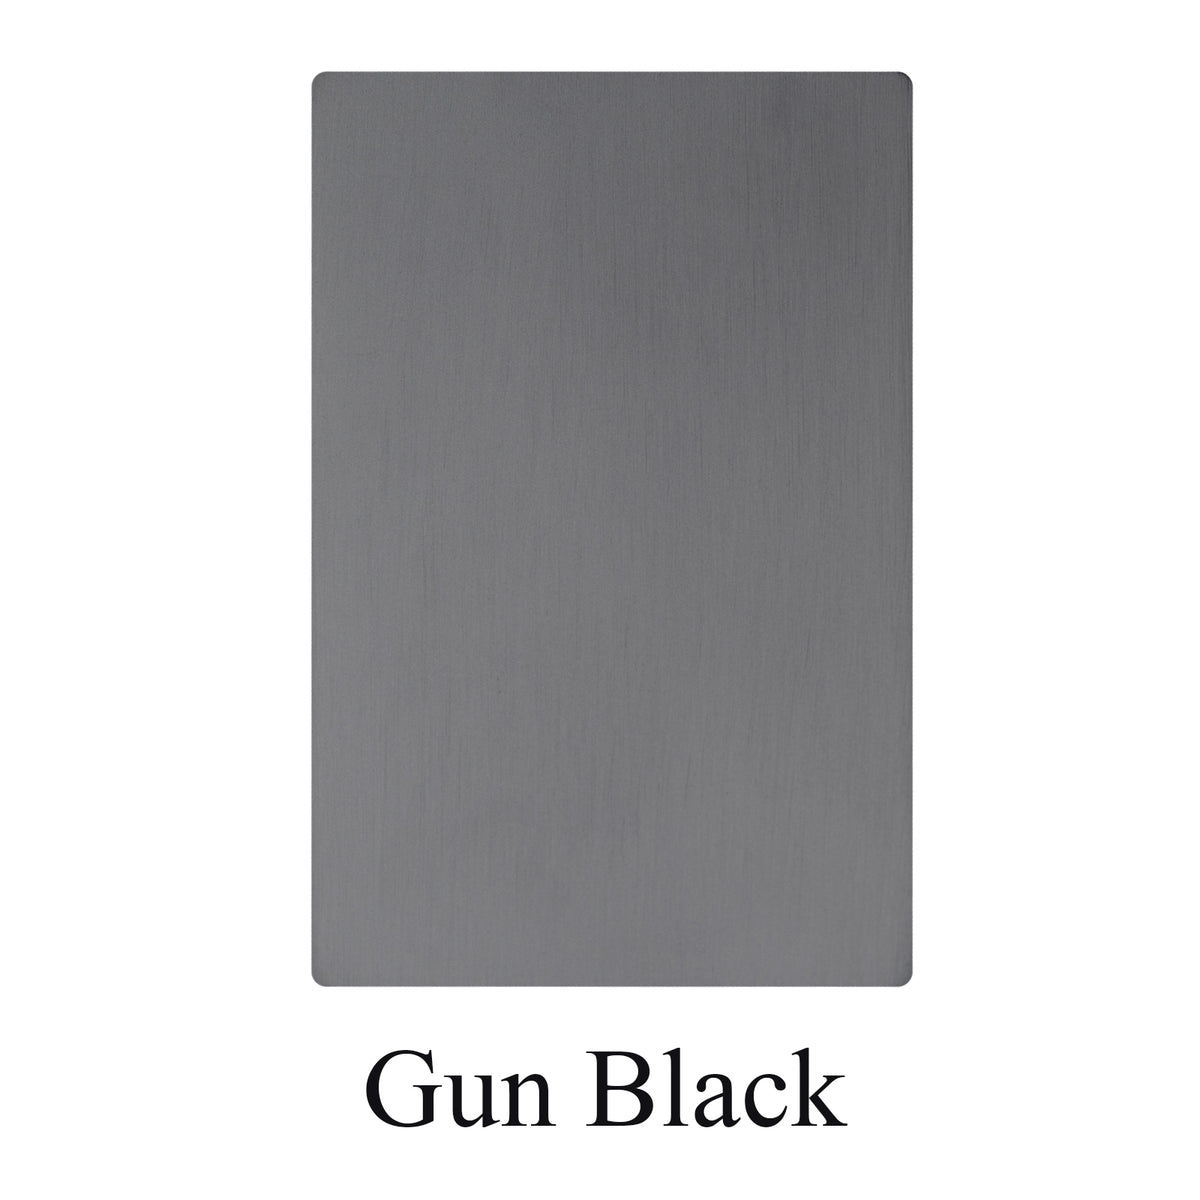 Akicon Gun Black Stainless Steel Sample